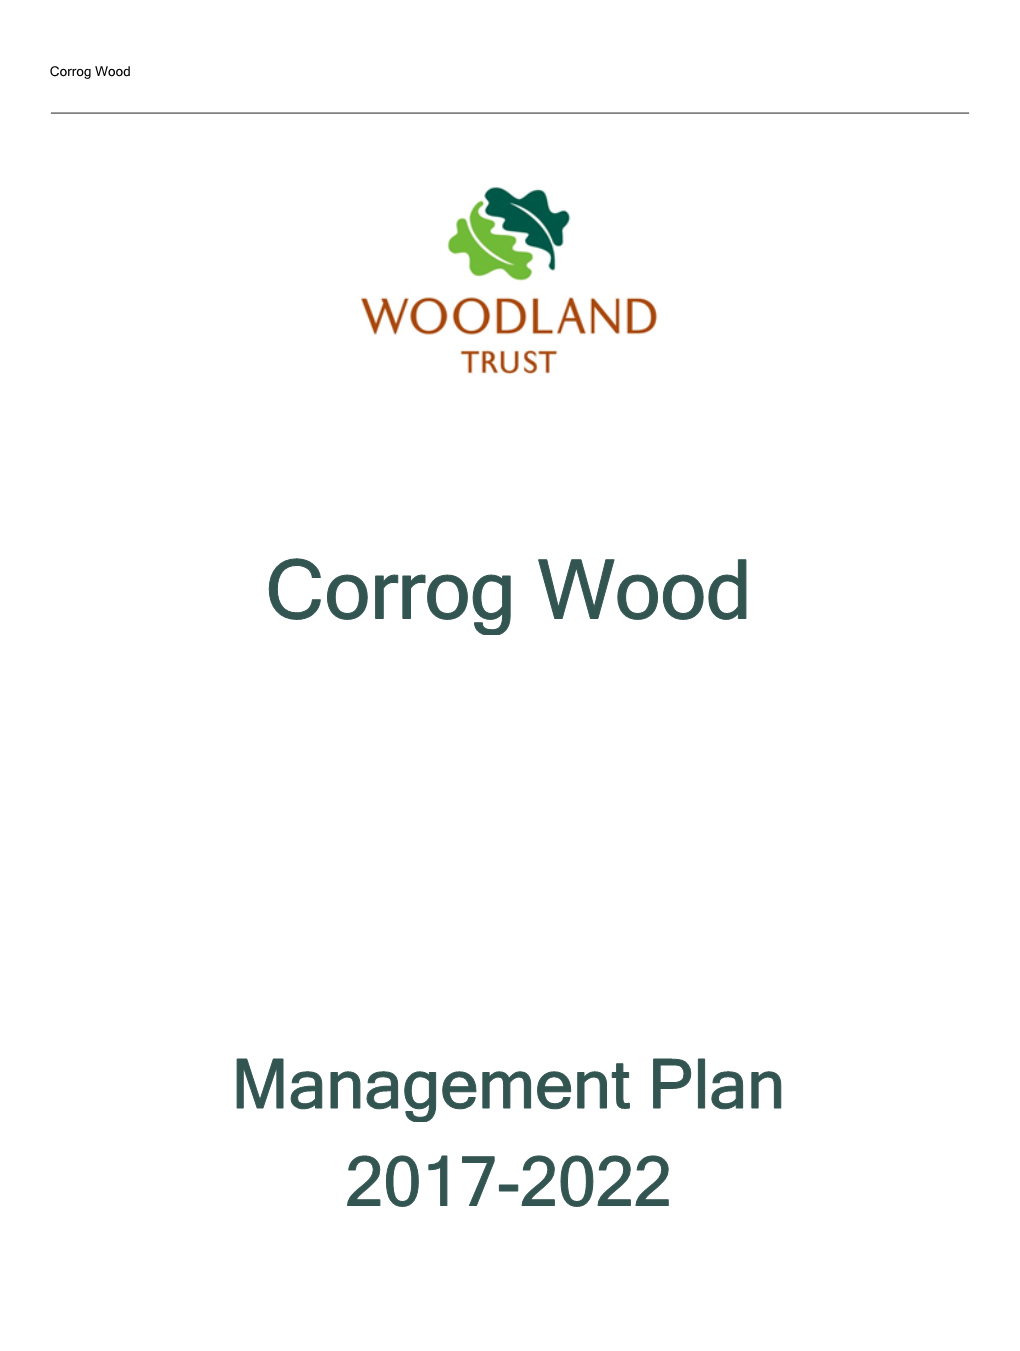 Download Corrog Wood Management Plan PDF (115